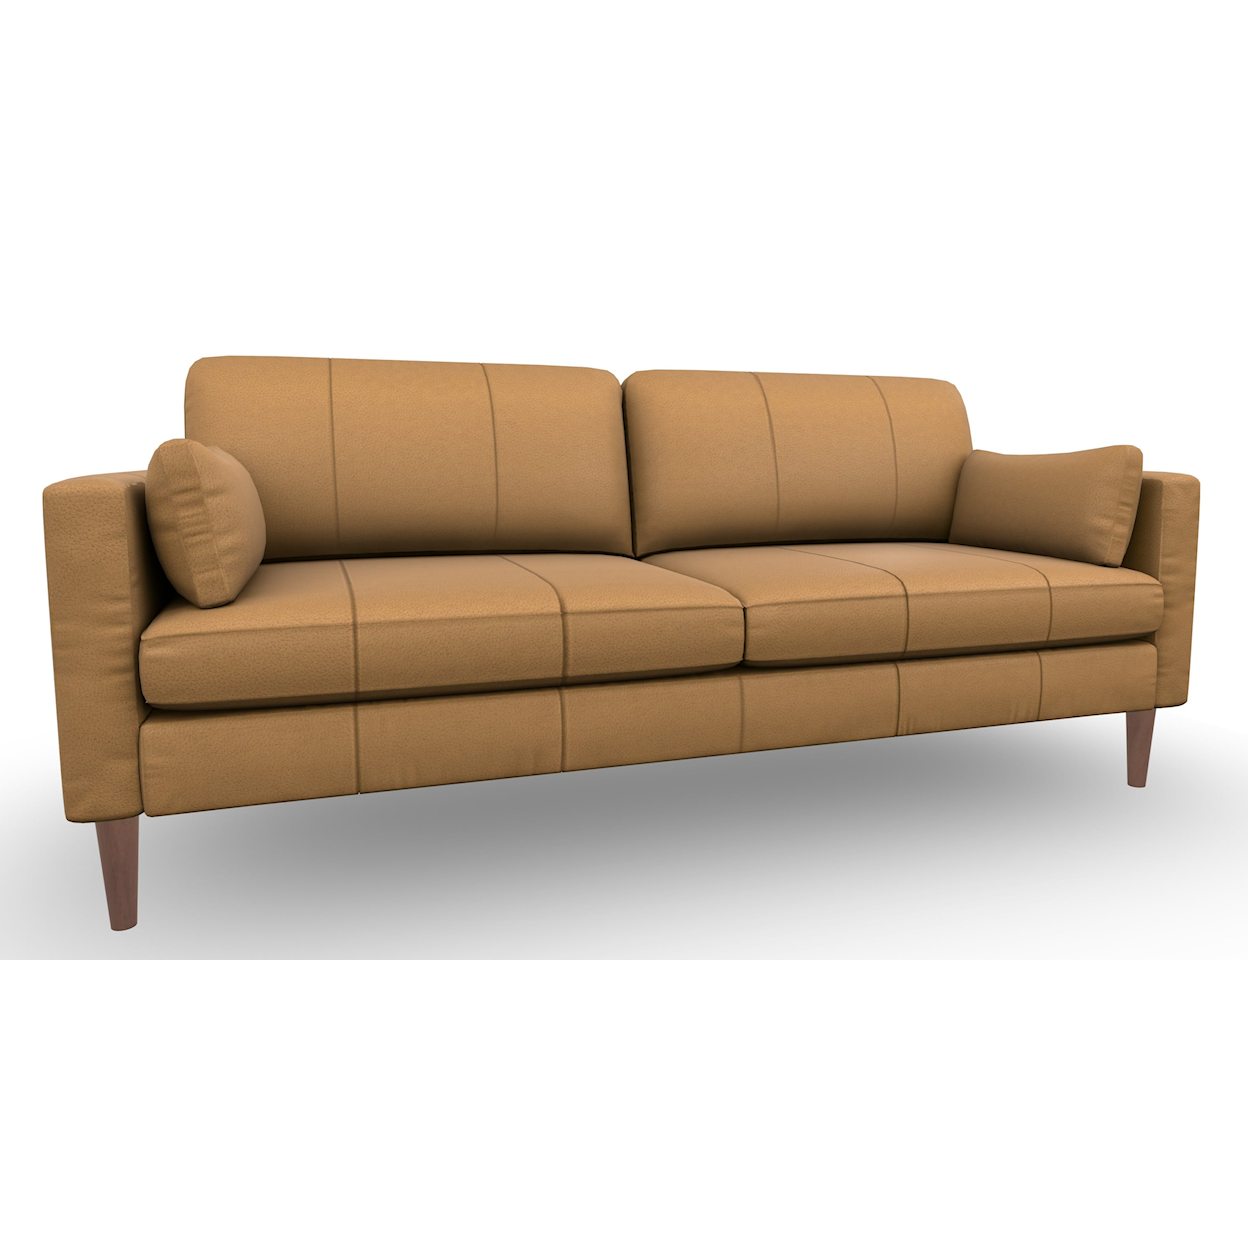 Best Home Furnishings Chelsea Leather Sofa